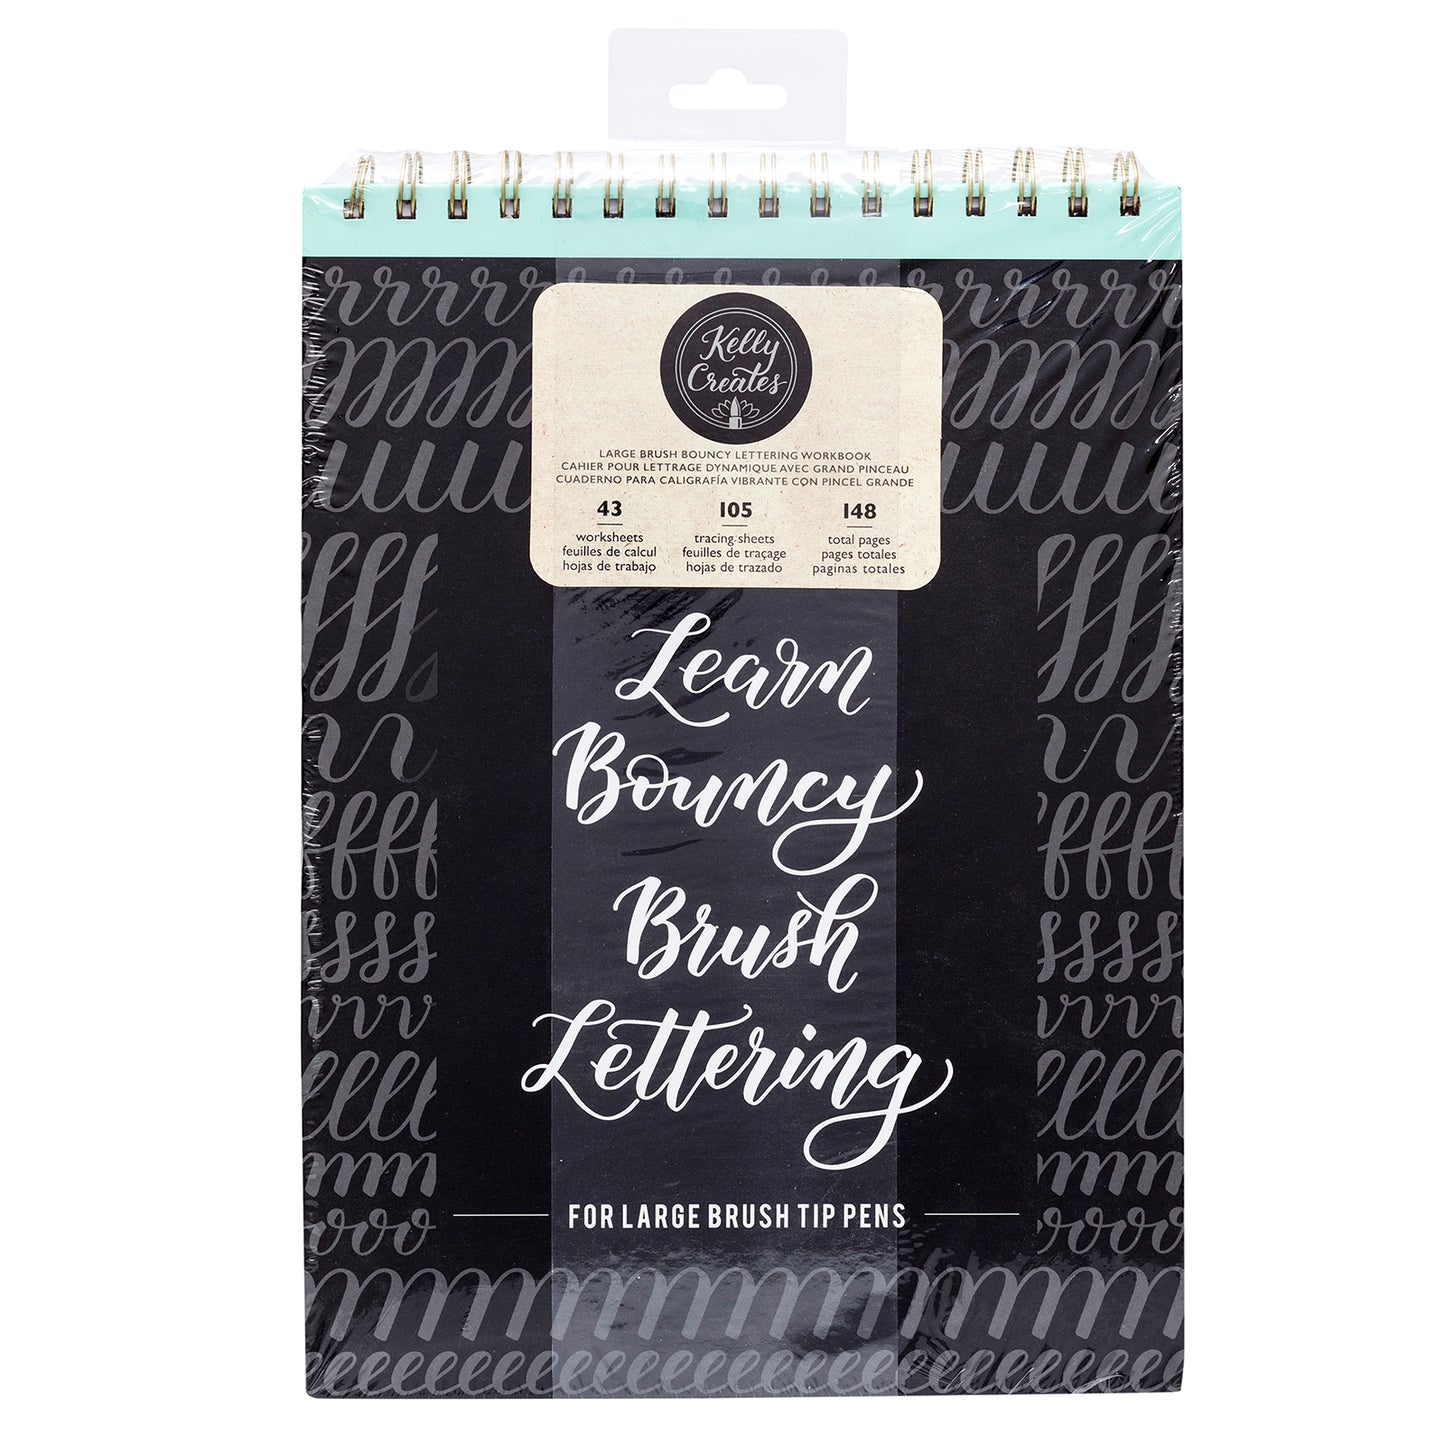 Kelly Creates Large Brush Bouncy Lettering Workbook